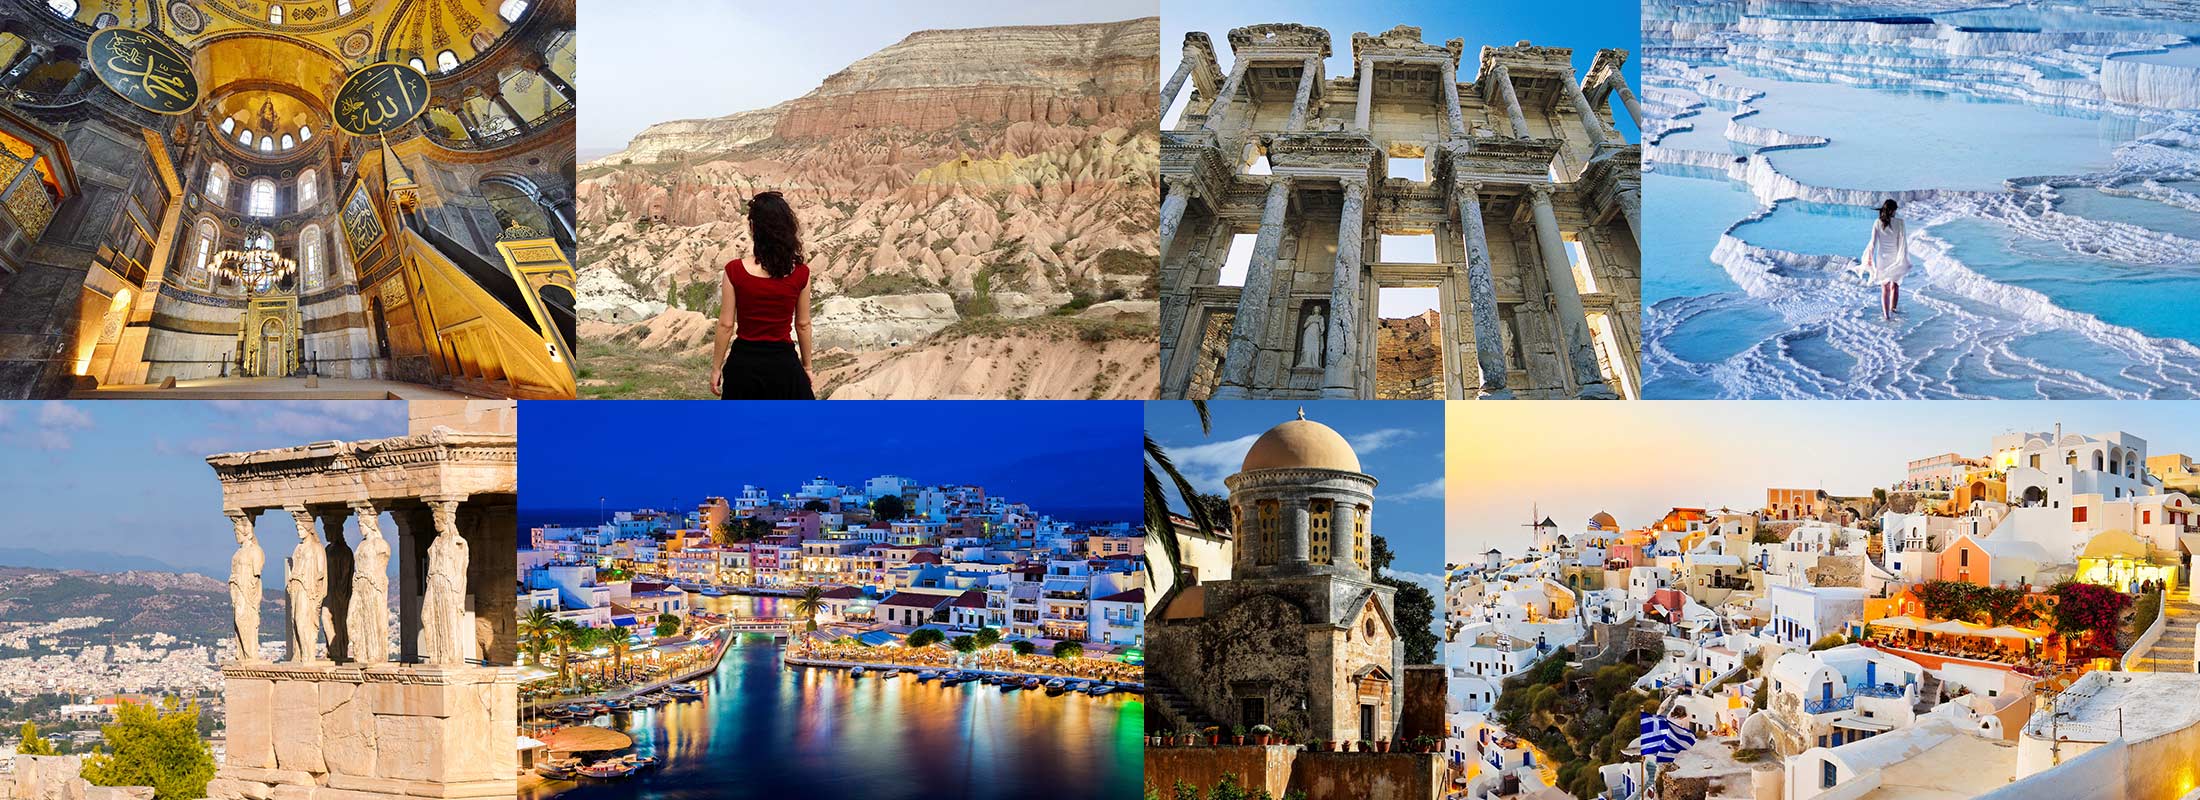 istanbul-cappadocia-ephesus-pamukkale-hierapolis-athens-santorini-heraklion-crete-greece-turkey-package-tours